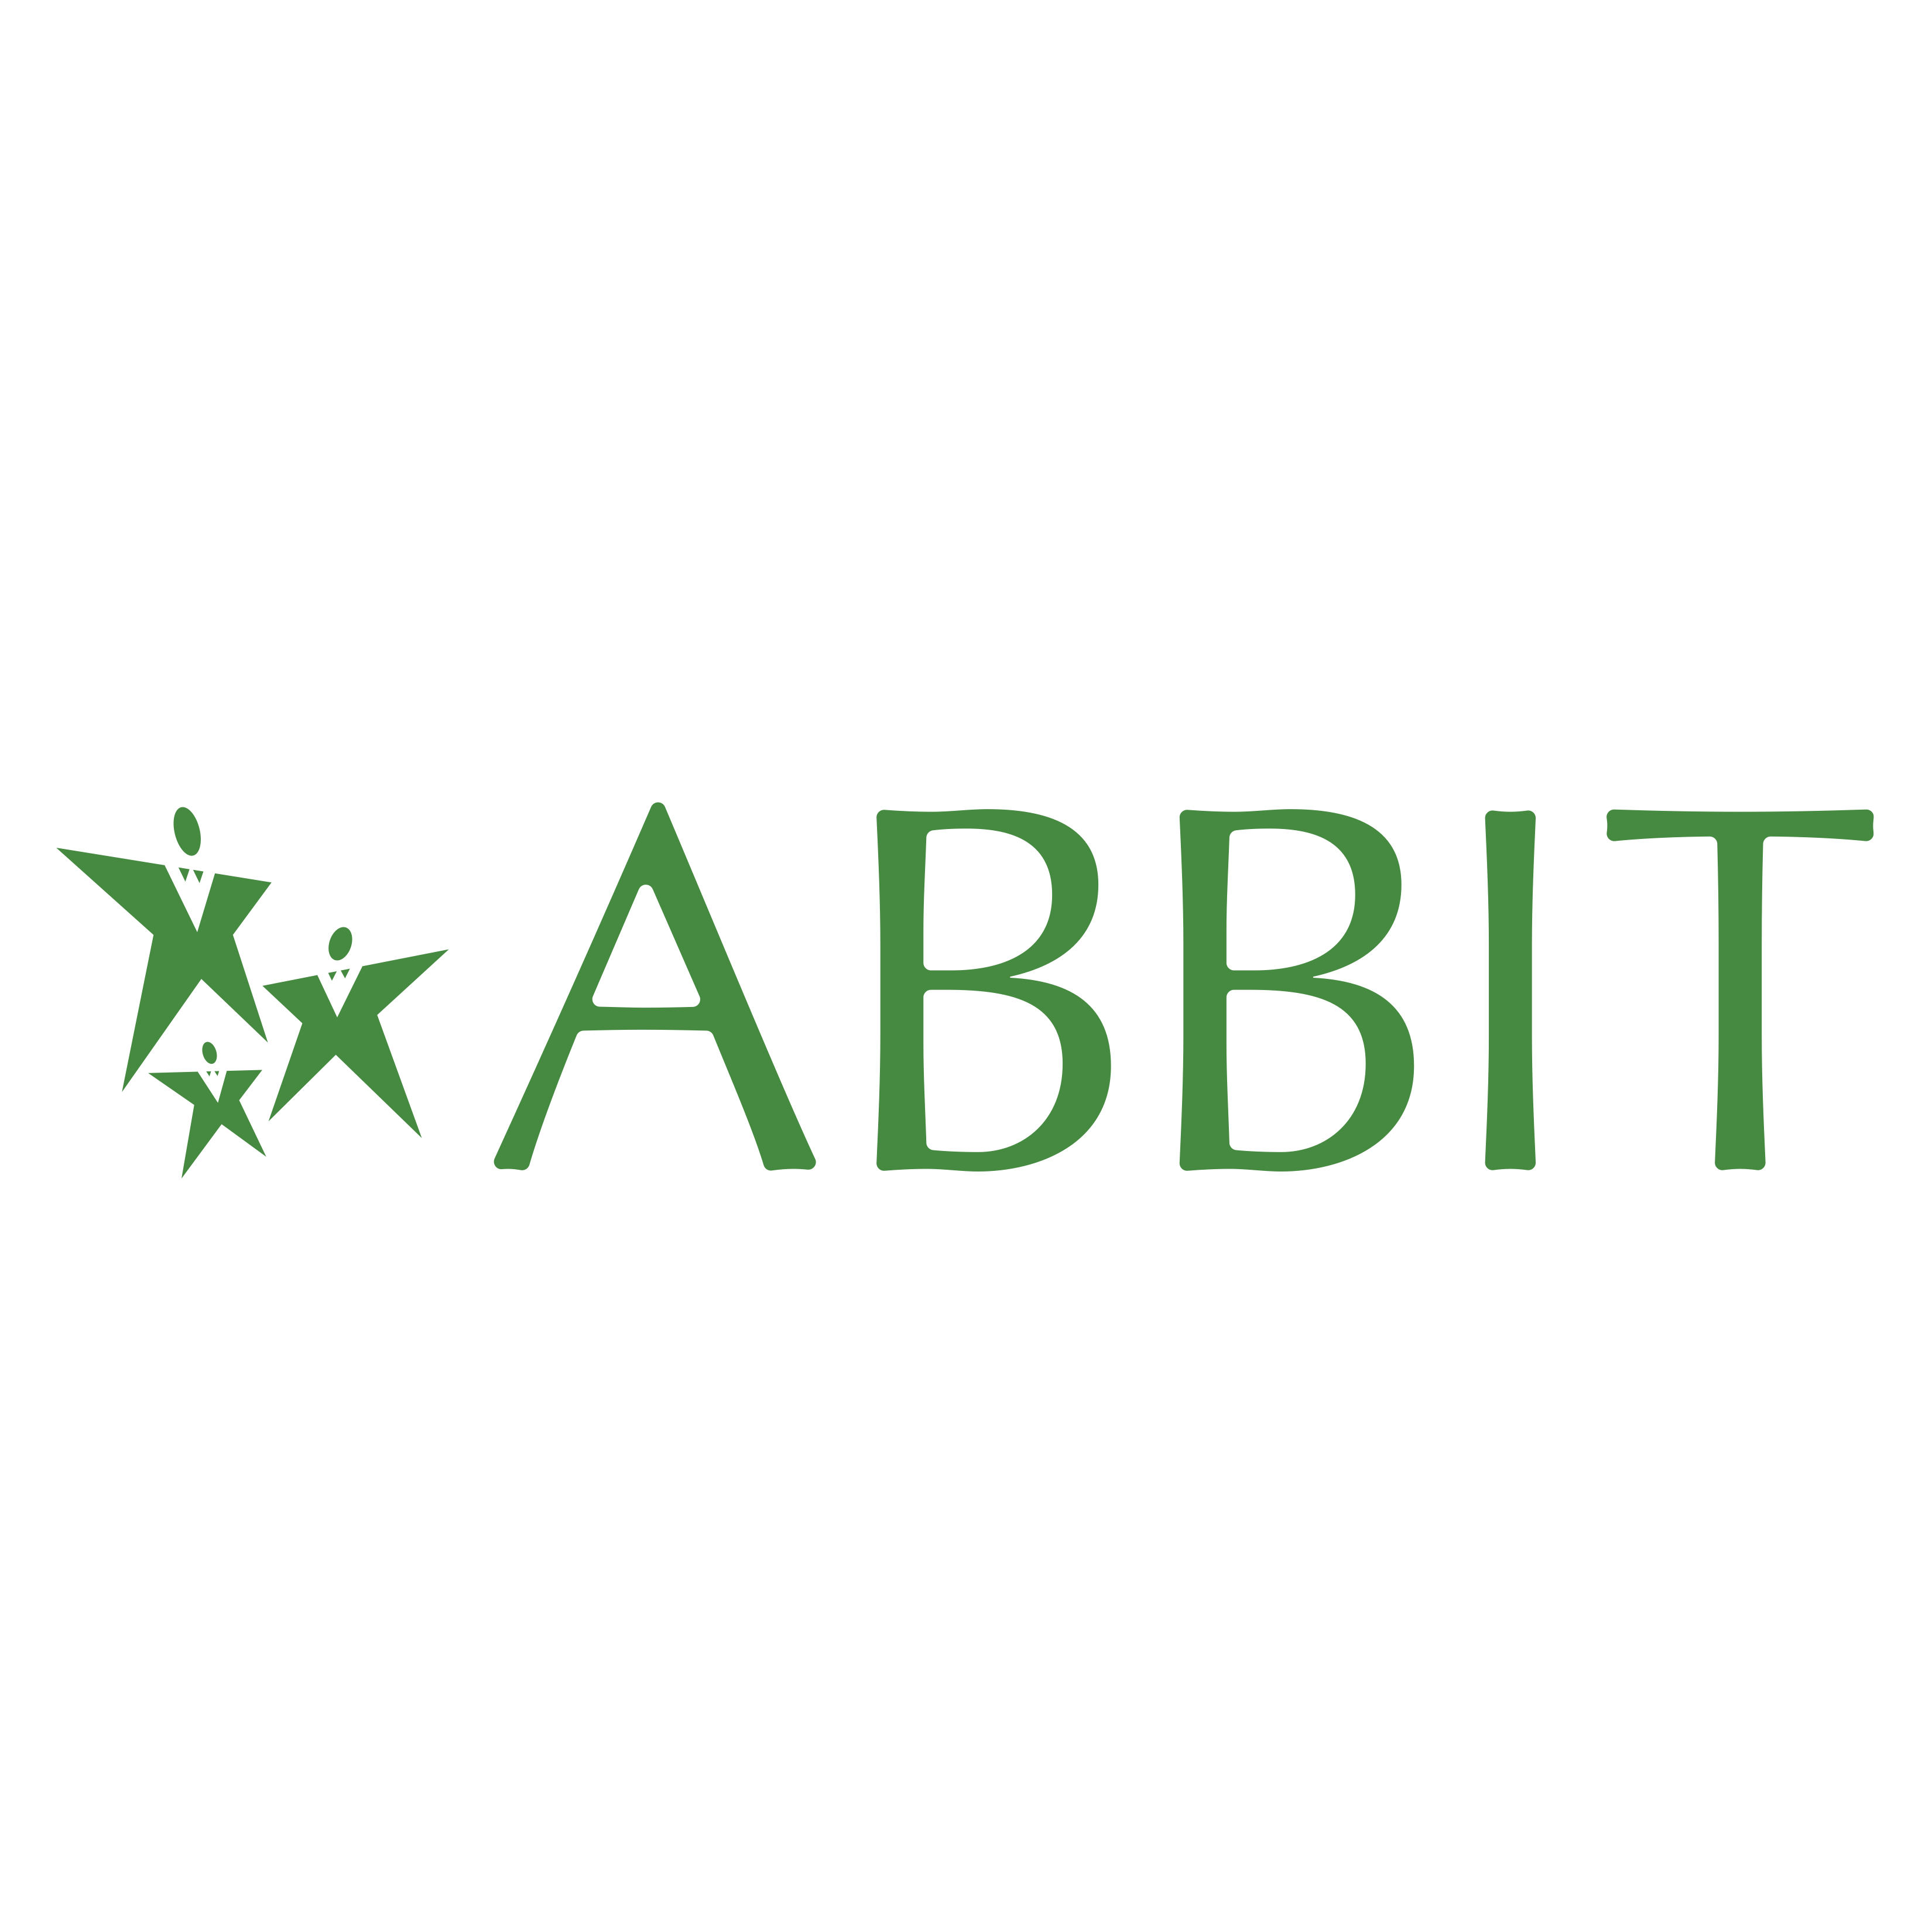 ABBIT meeting innovators Barcelona Milan Frankfurt Amsterdam London